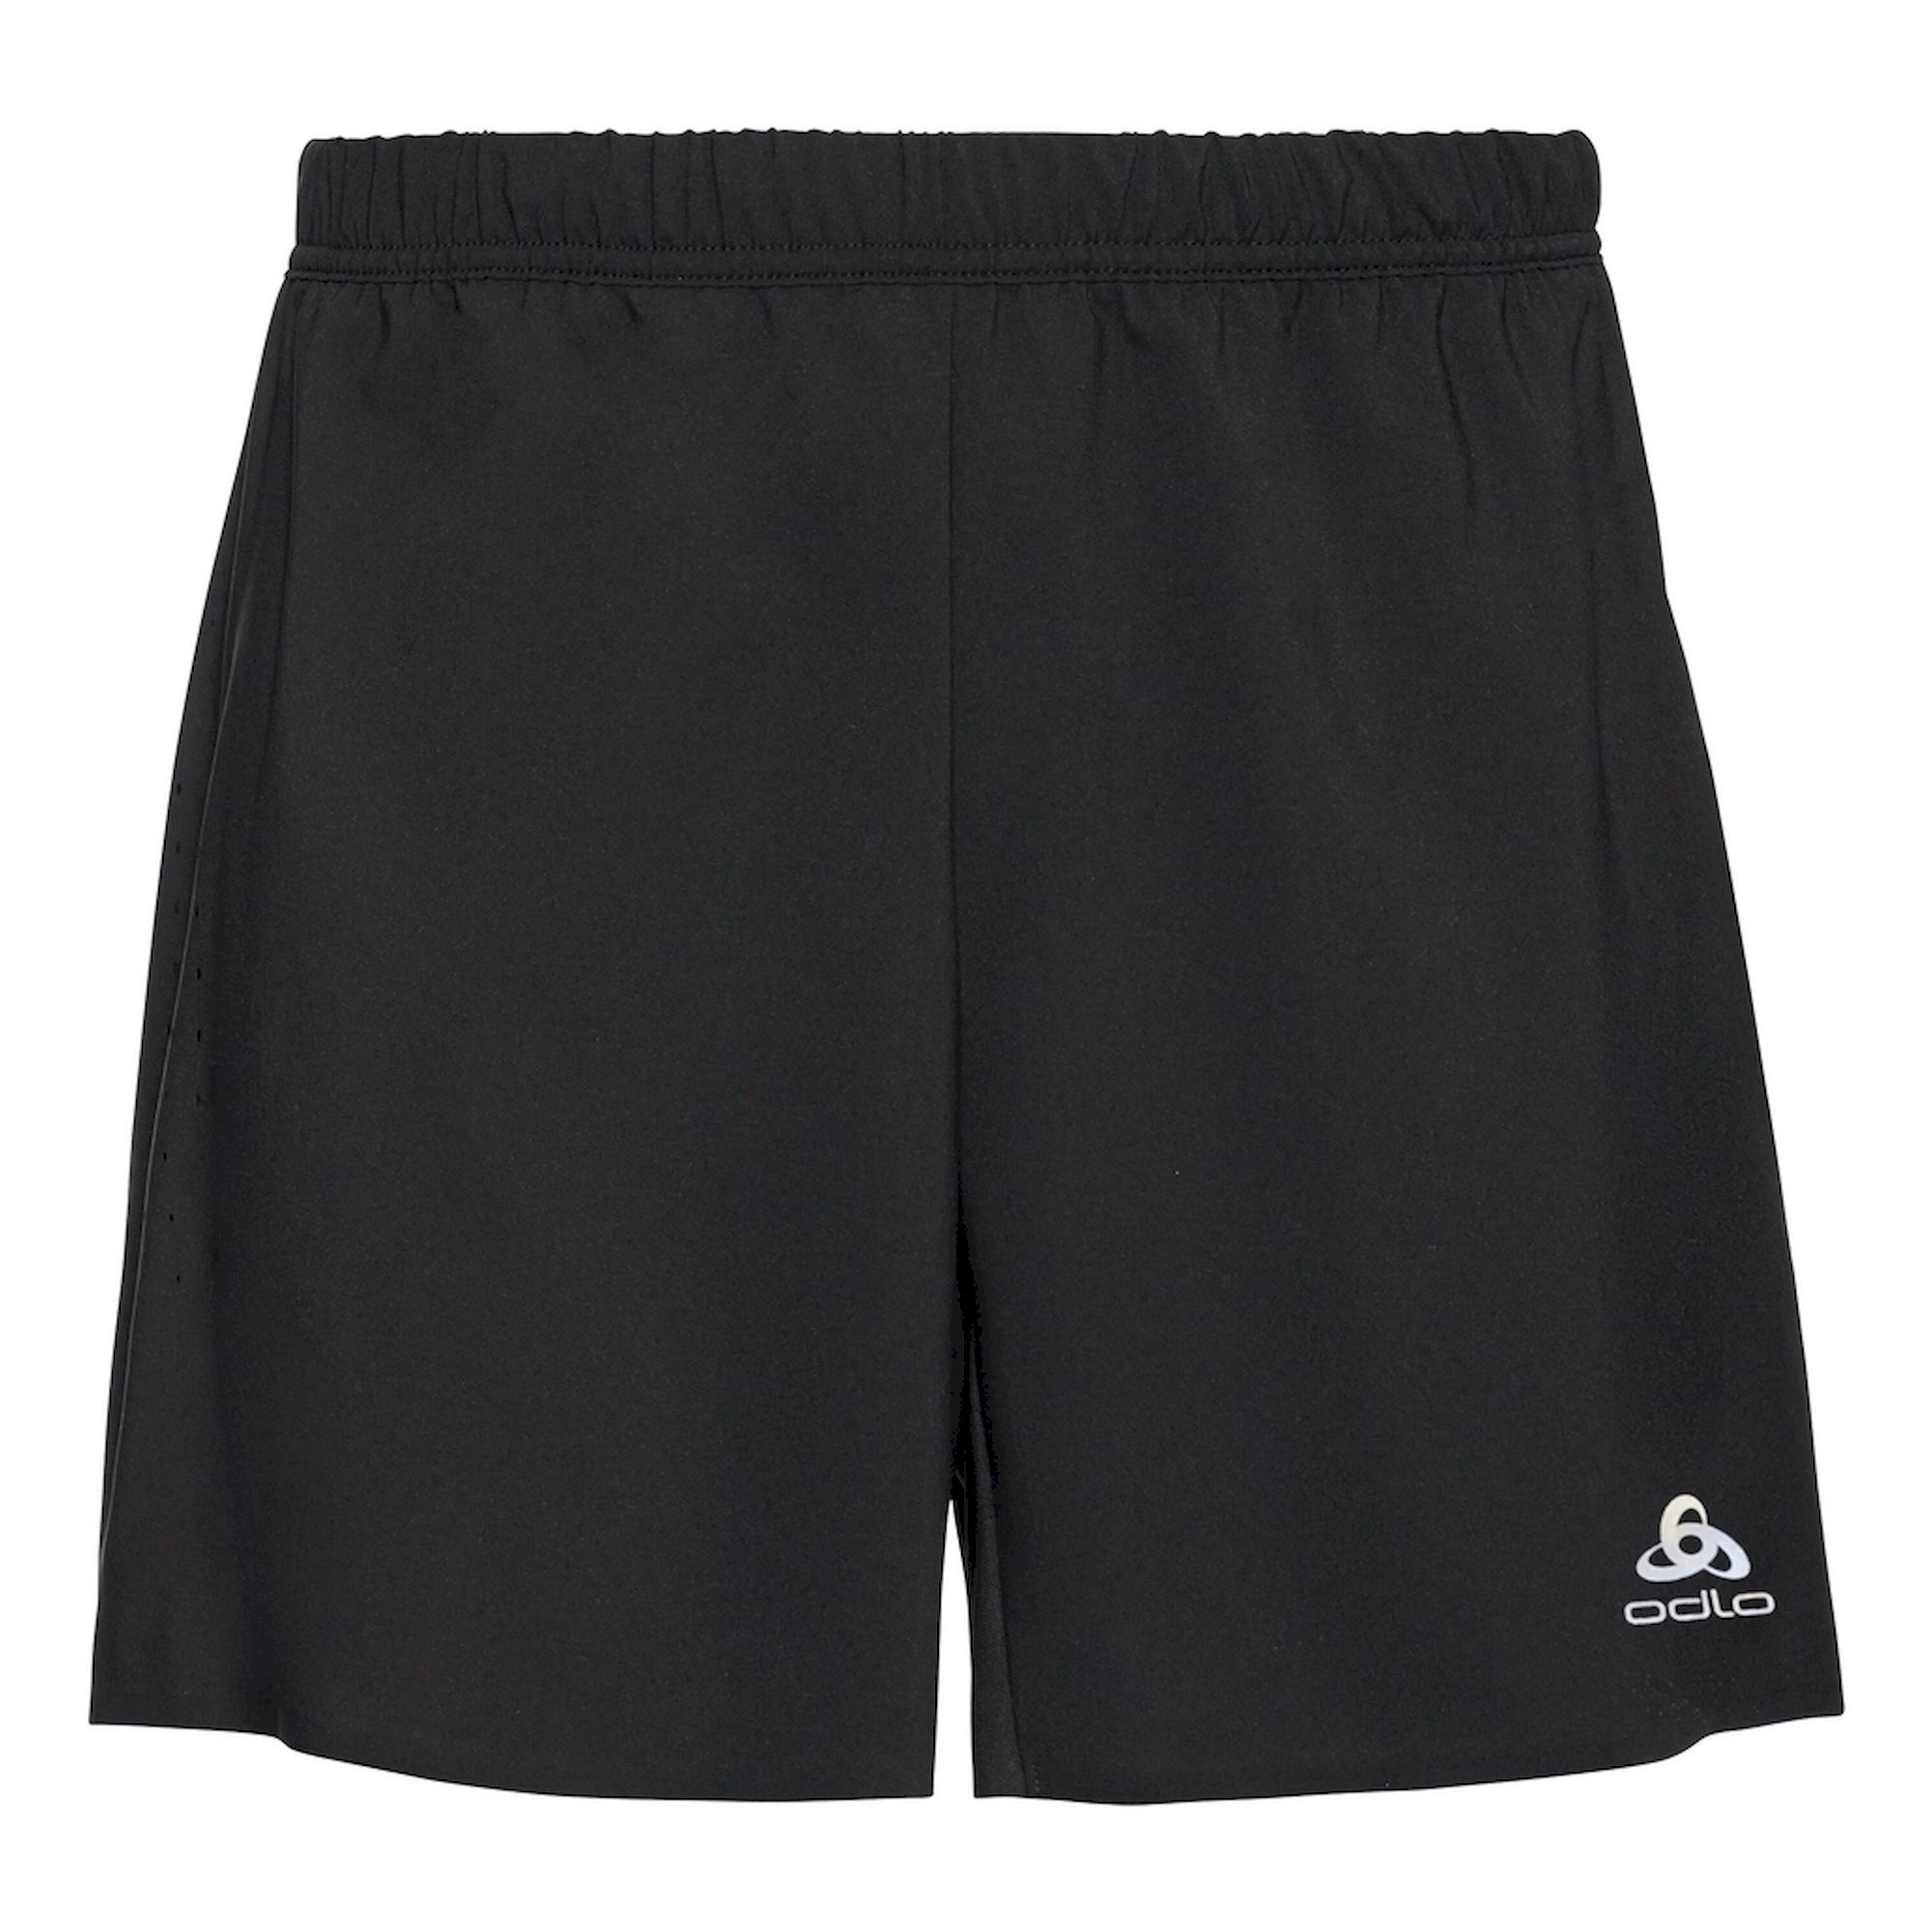 Odlo Zeroweight 5 Inch - Pantalones cortos de running - Hombre